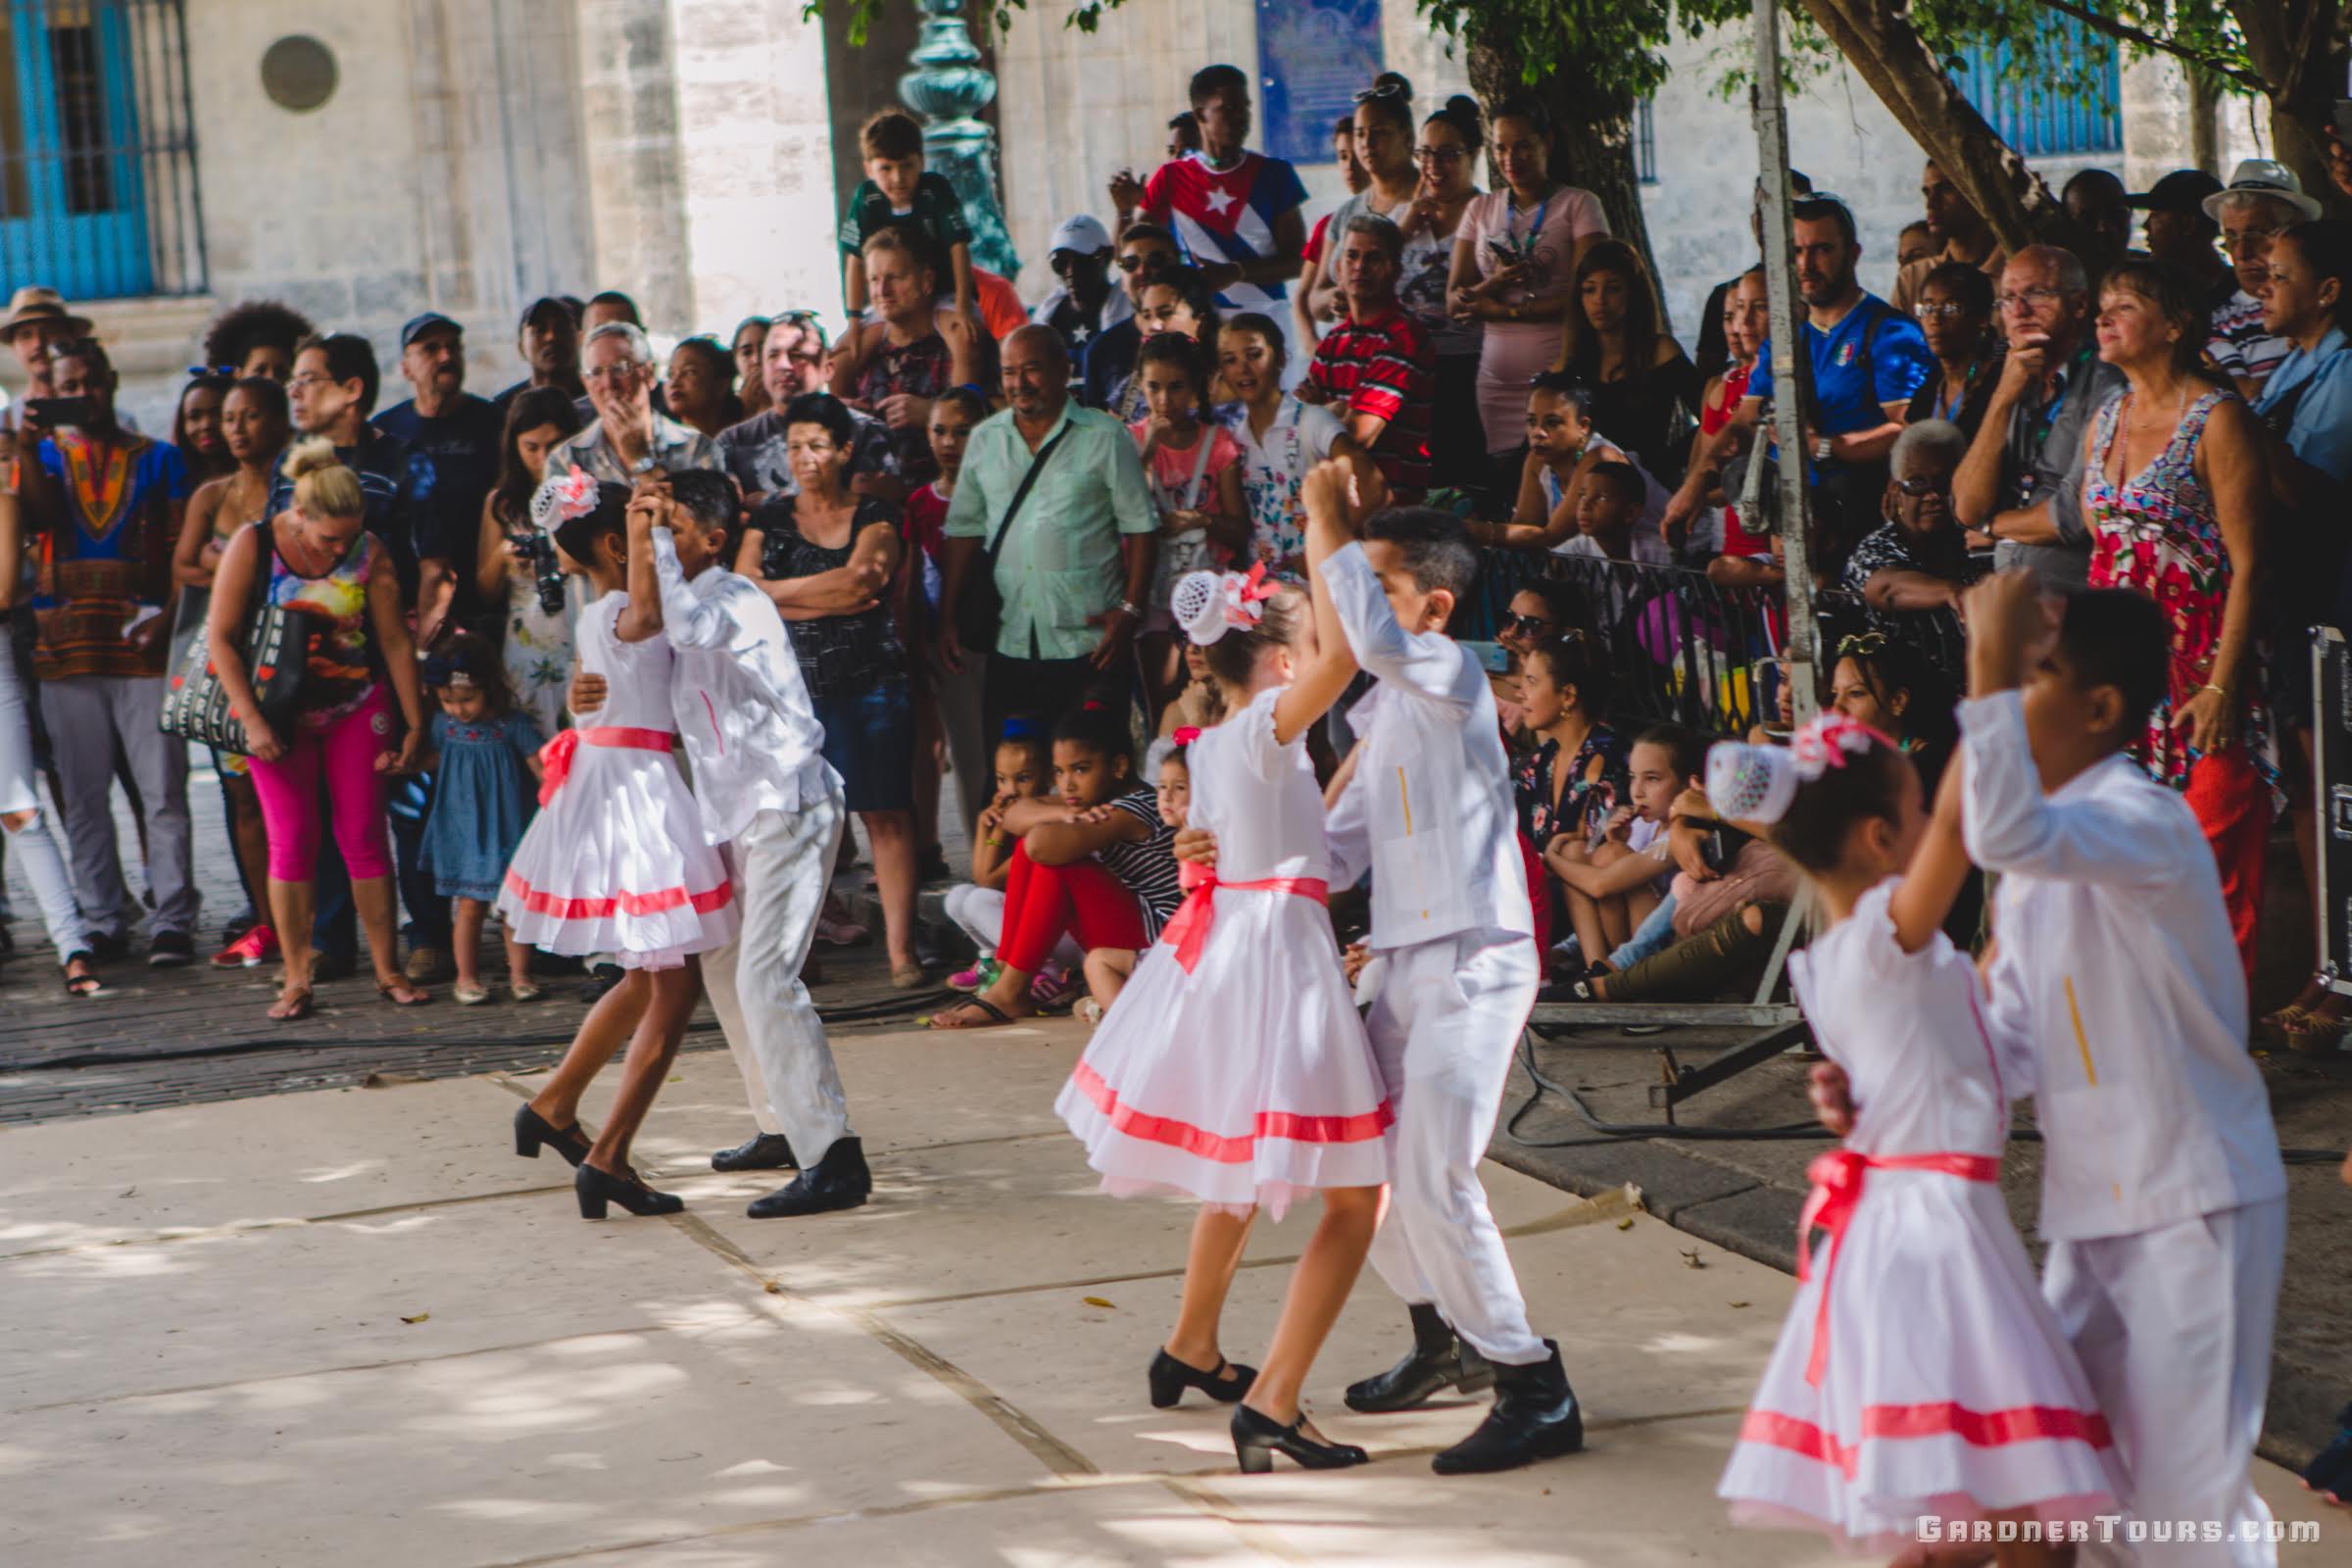 Kids Dancing in traditional Cuban dress at the Plaza de Armas in Havana, Cuba